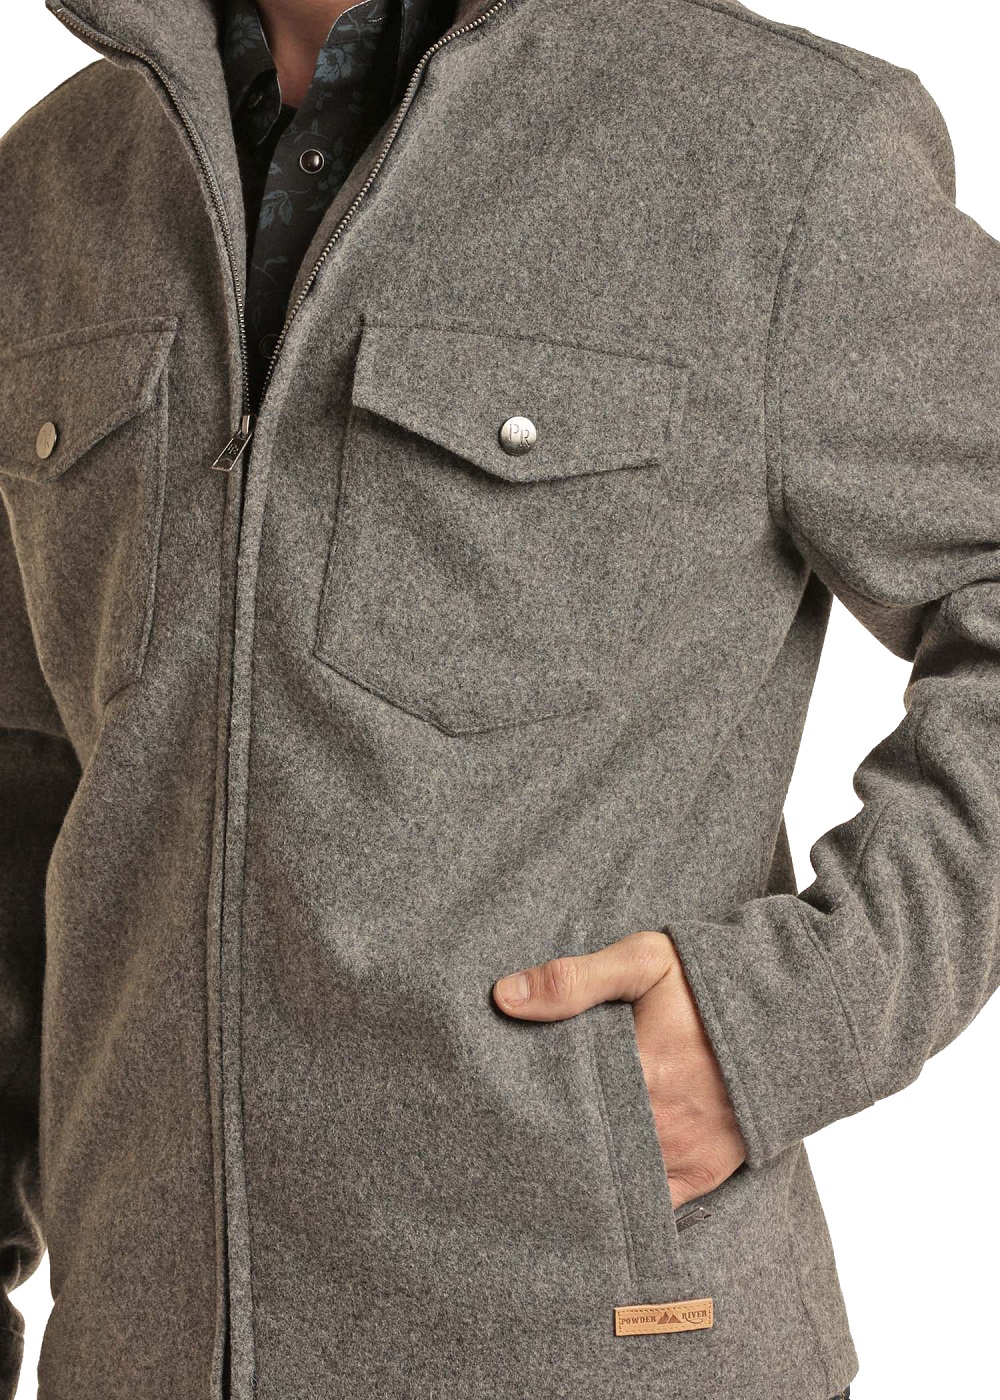 Men's Powder River Charcoal Jacket